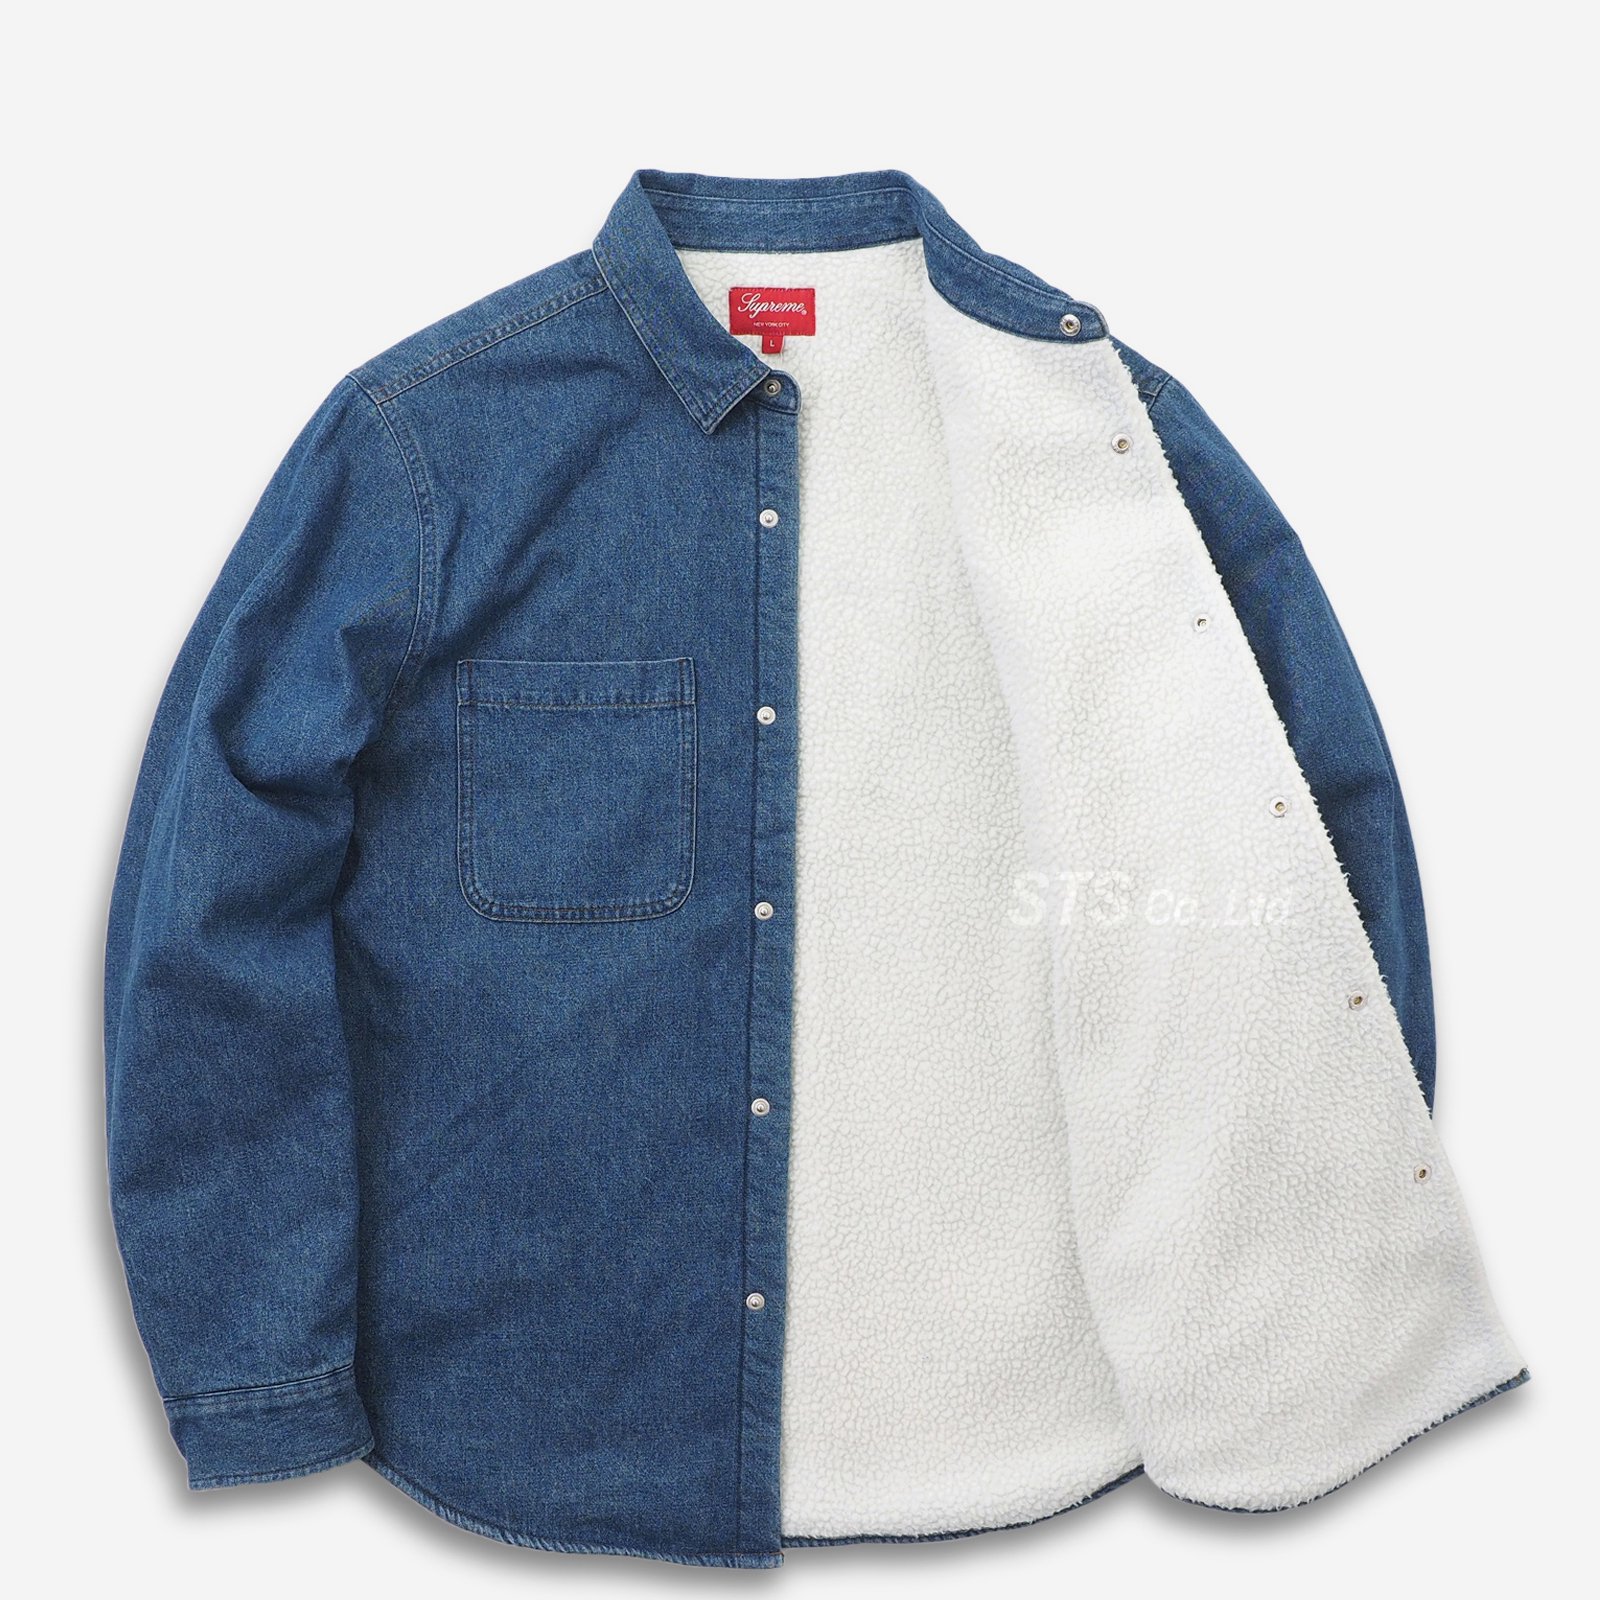 【Mサイズ送料込】シュプリーム Sherpa Lined Denim Shirt